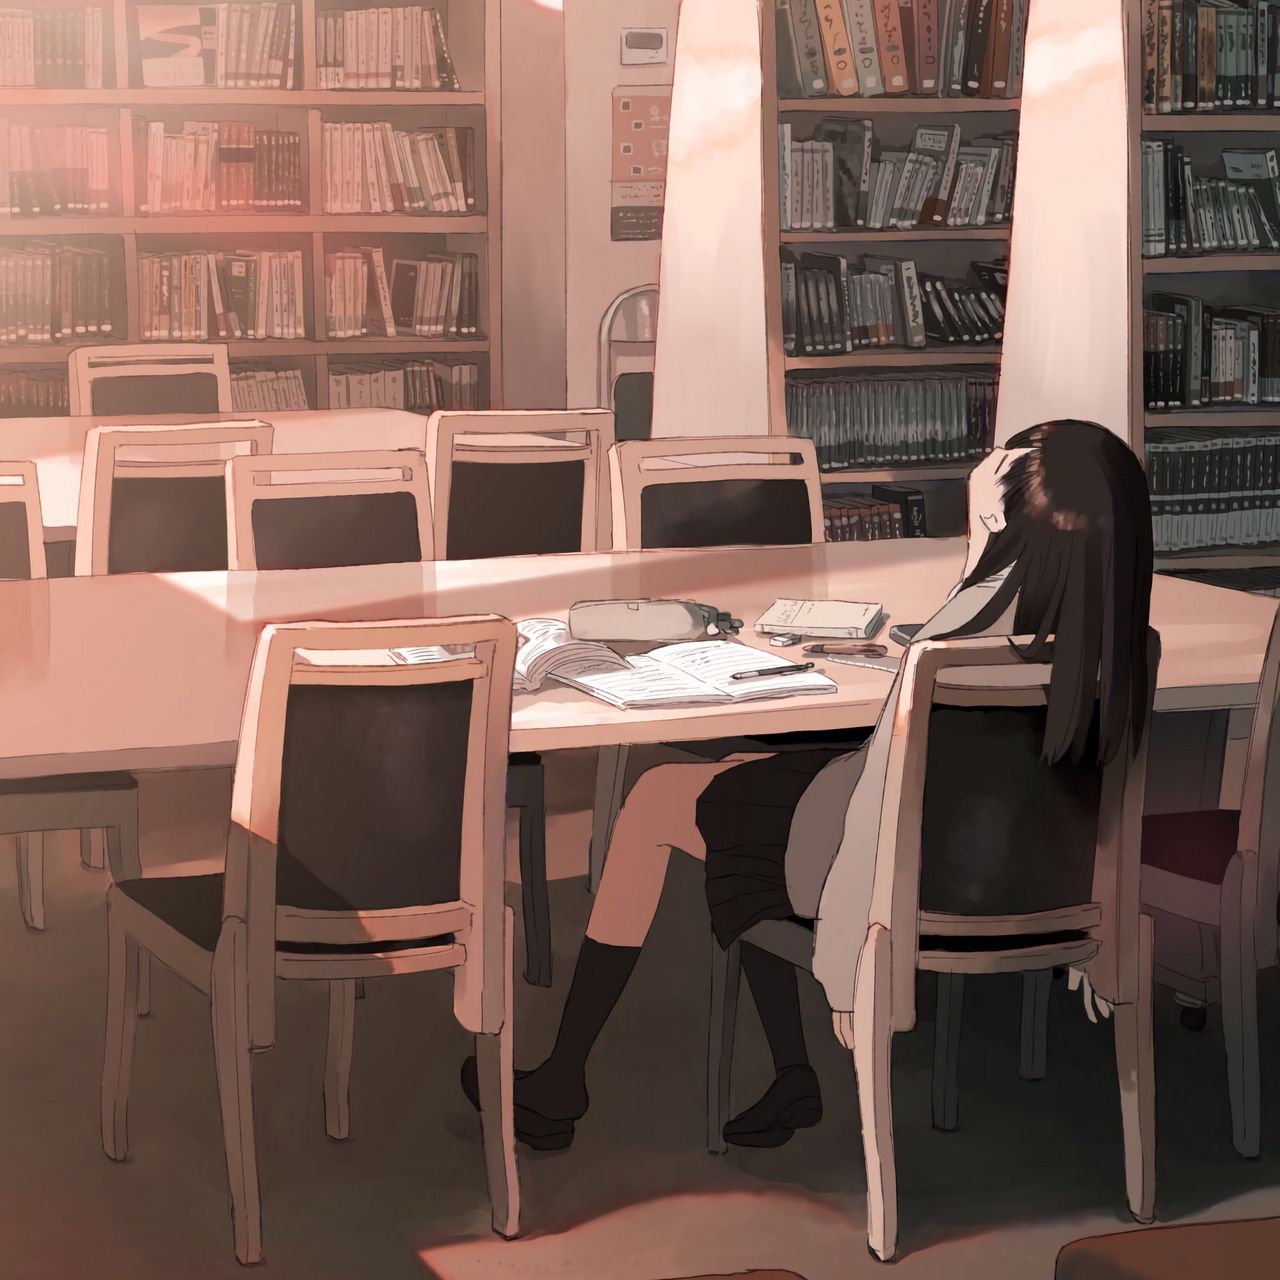 Download wallpaper x girl library study anime ipad ipad ipad mini for parallax hd background